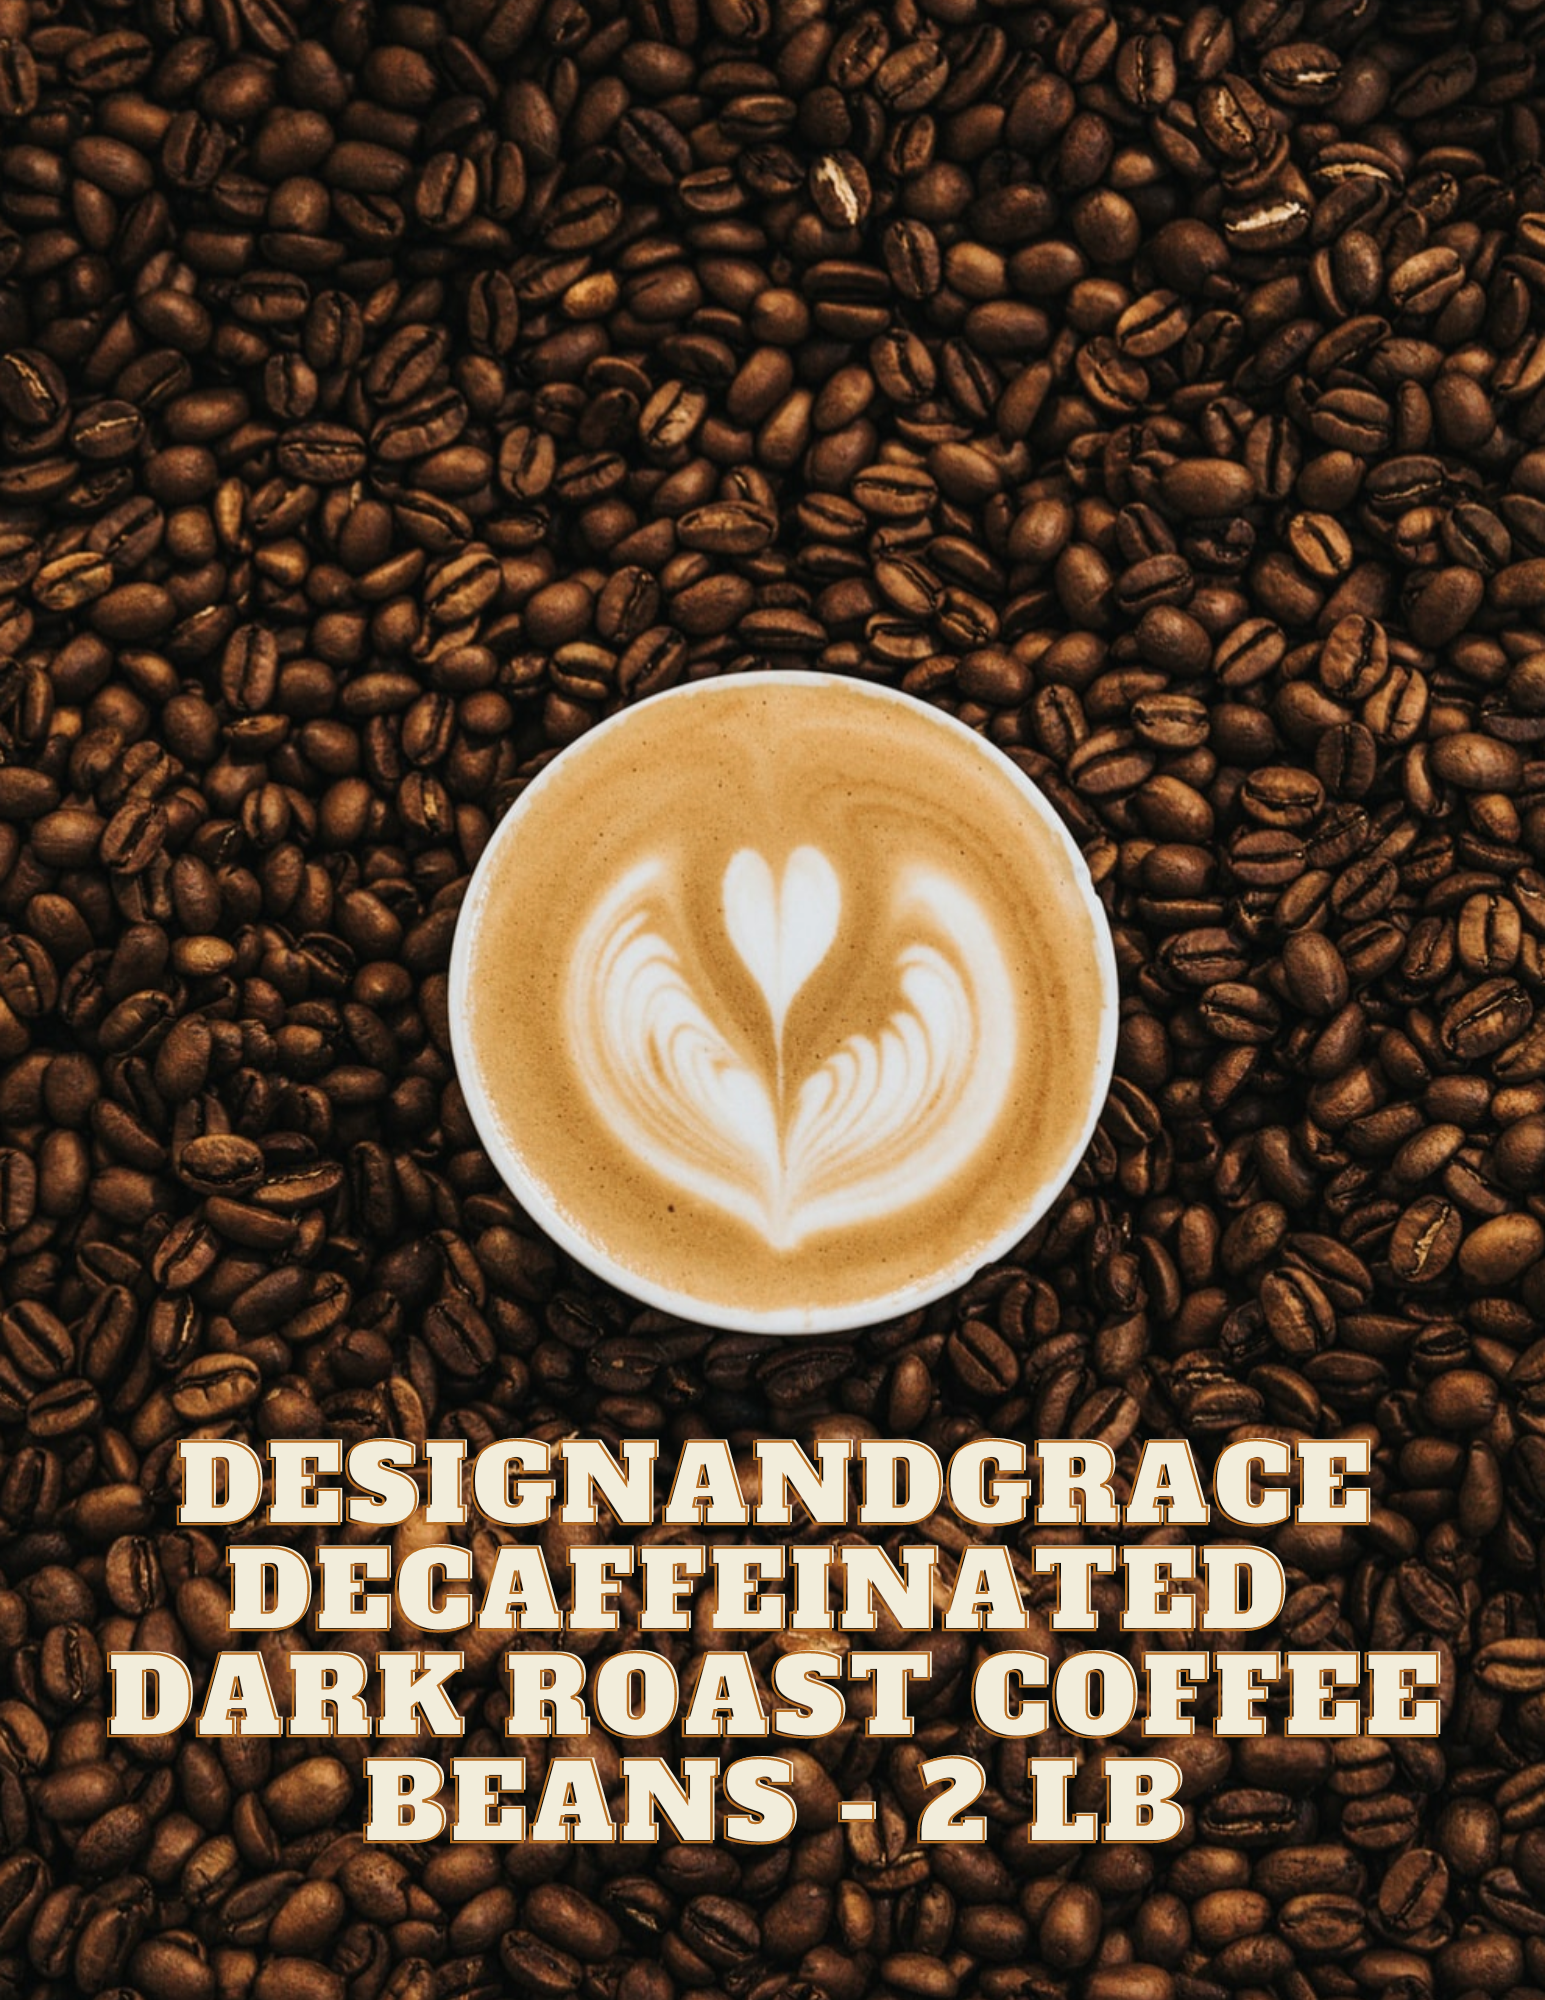 DesignandGrace Decaffeinated Dark Roast Coffee Beans - 2 lb